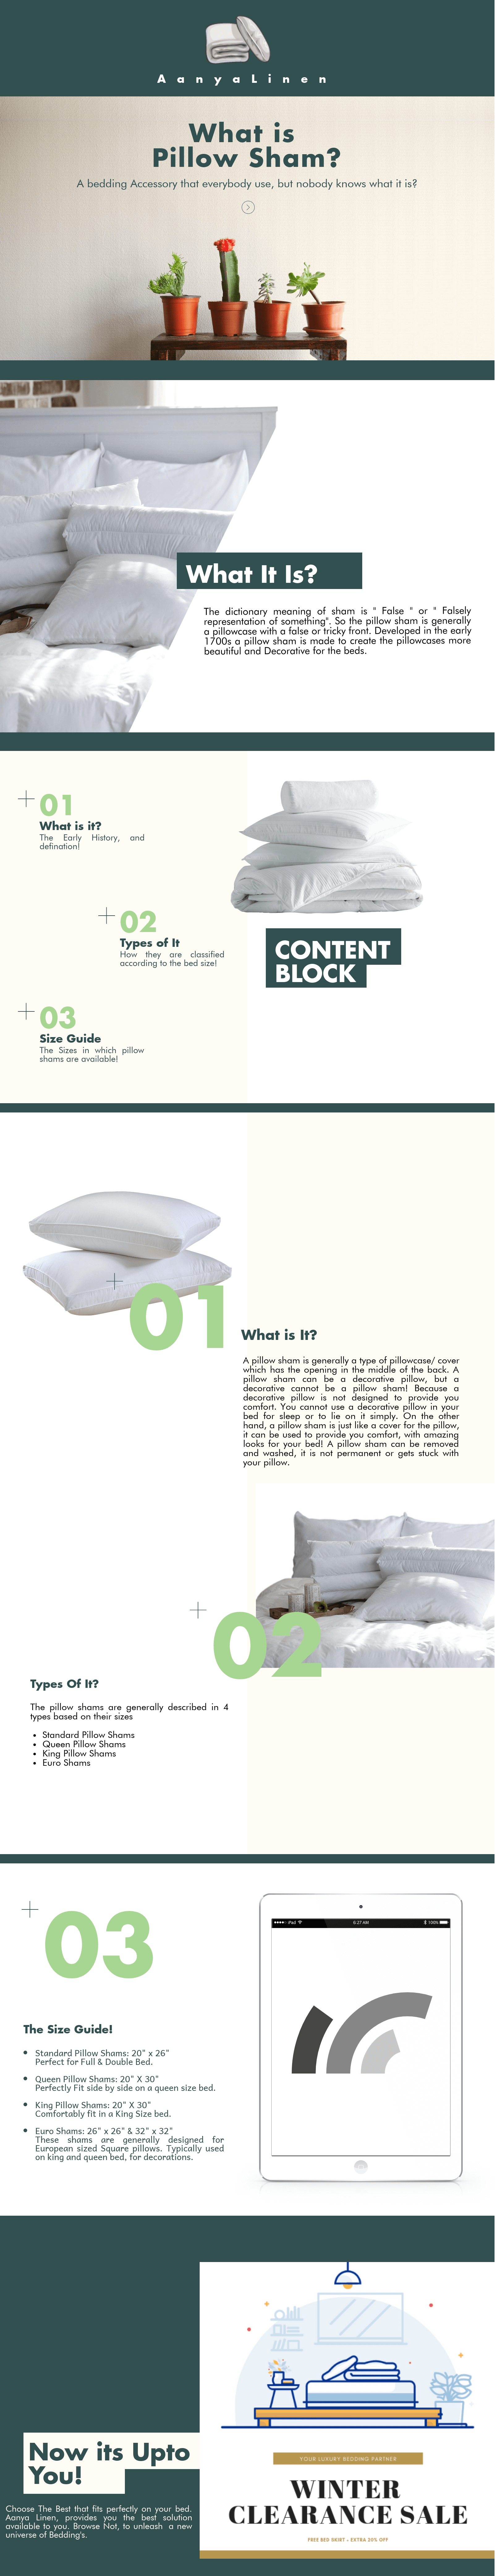 pillow-sham-infographic-plaza